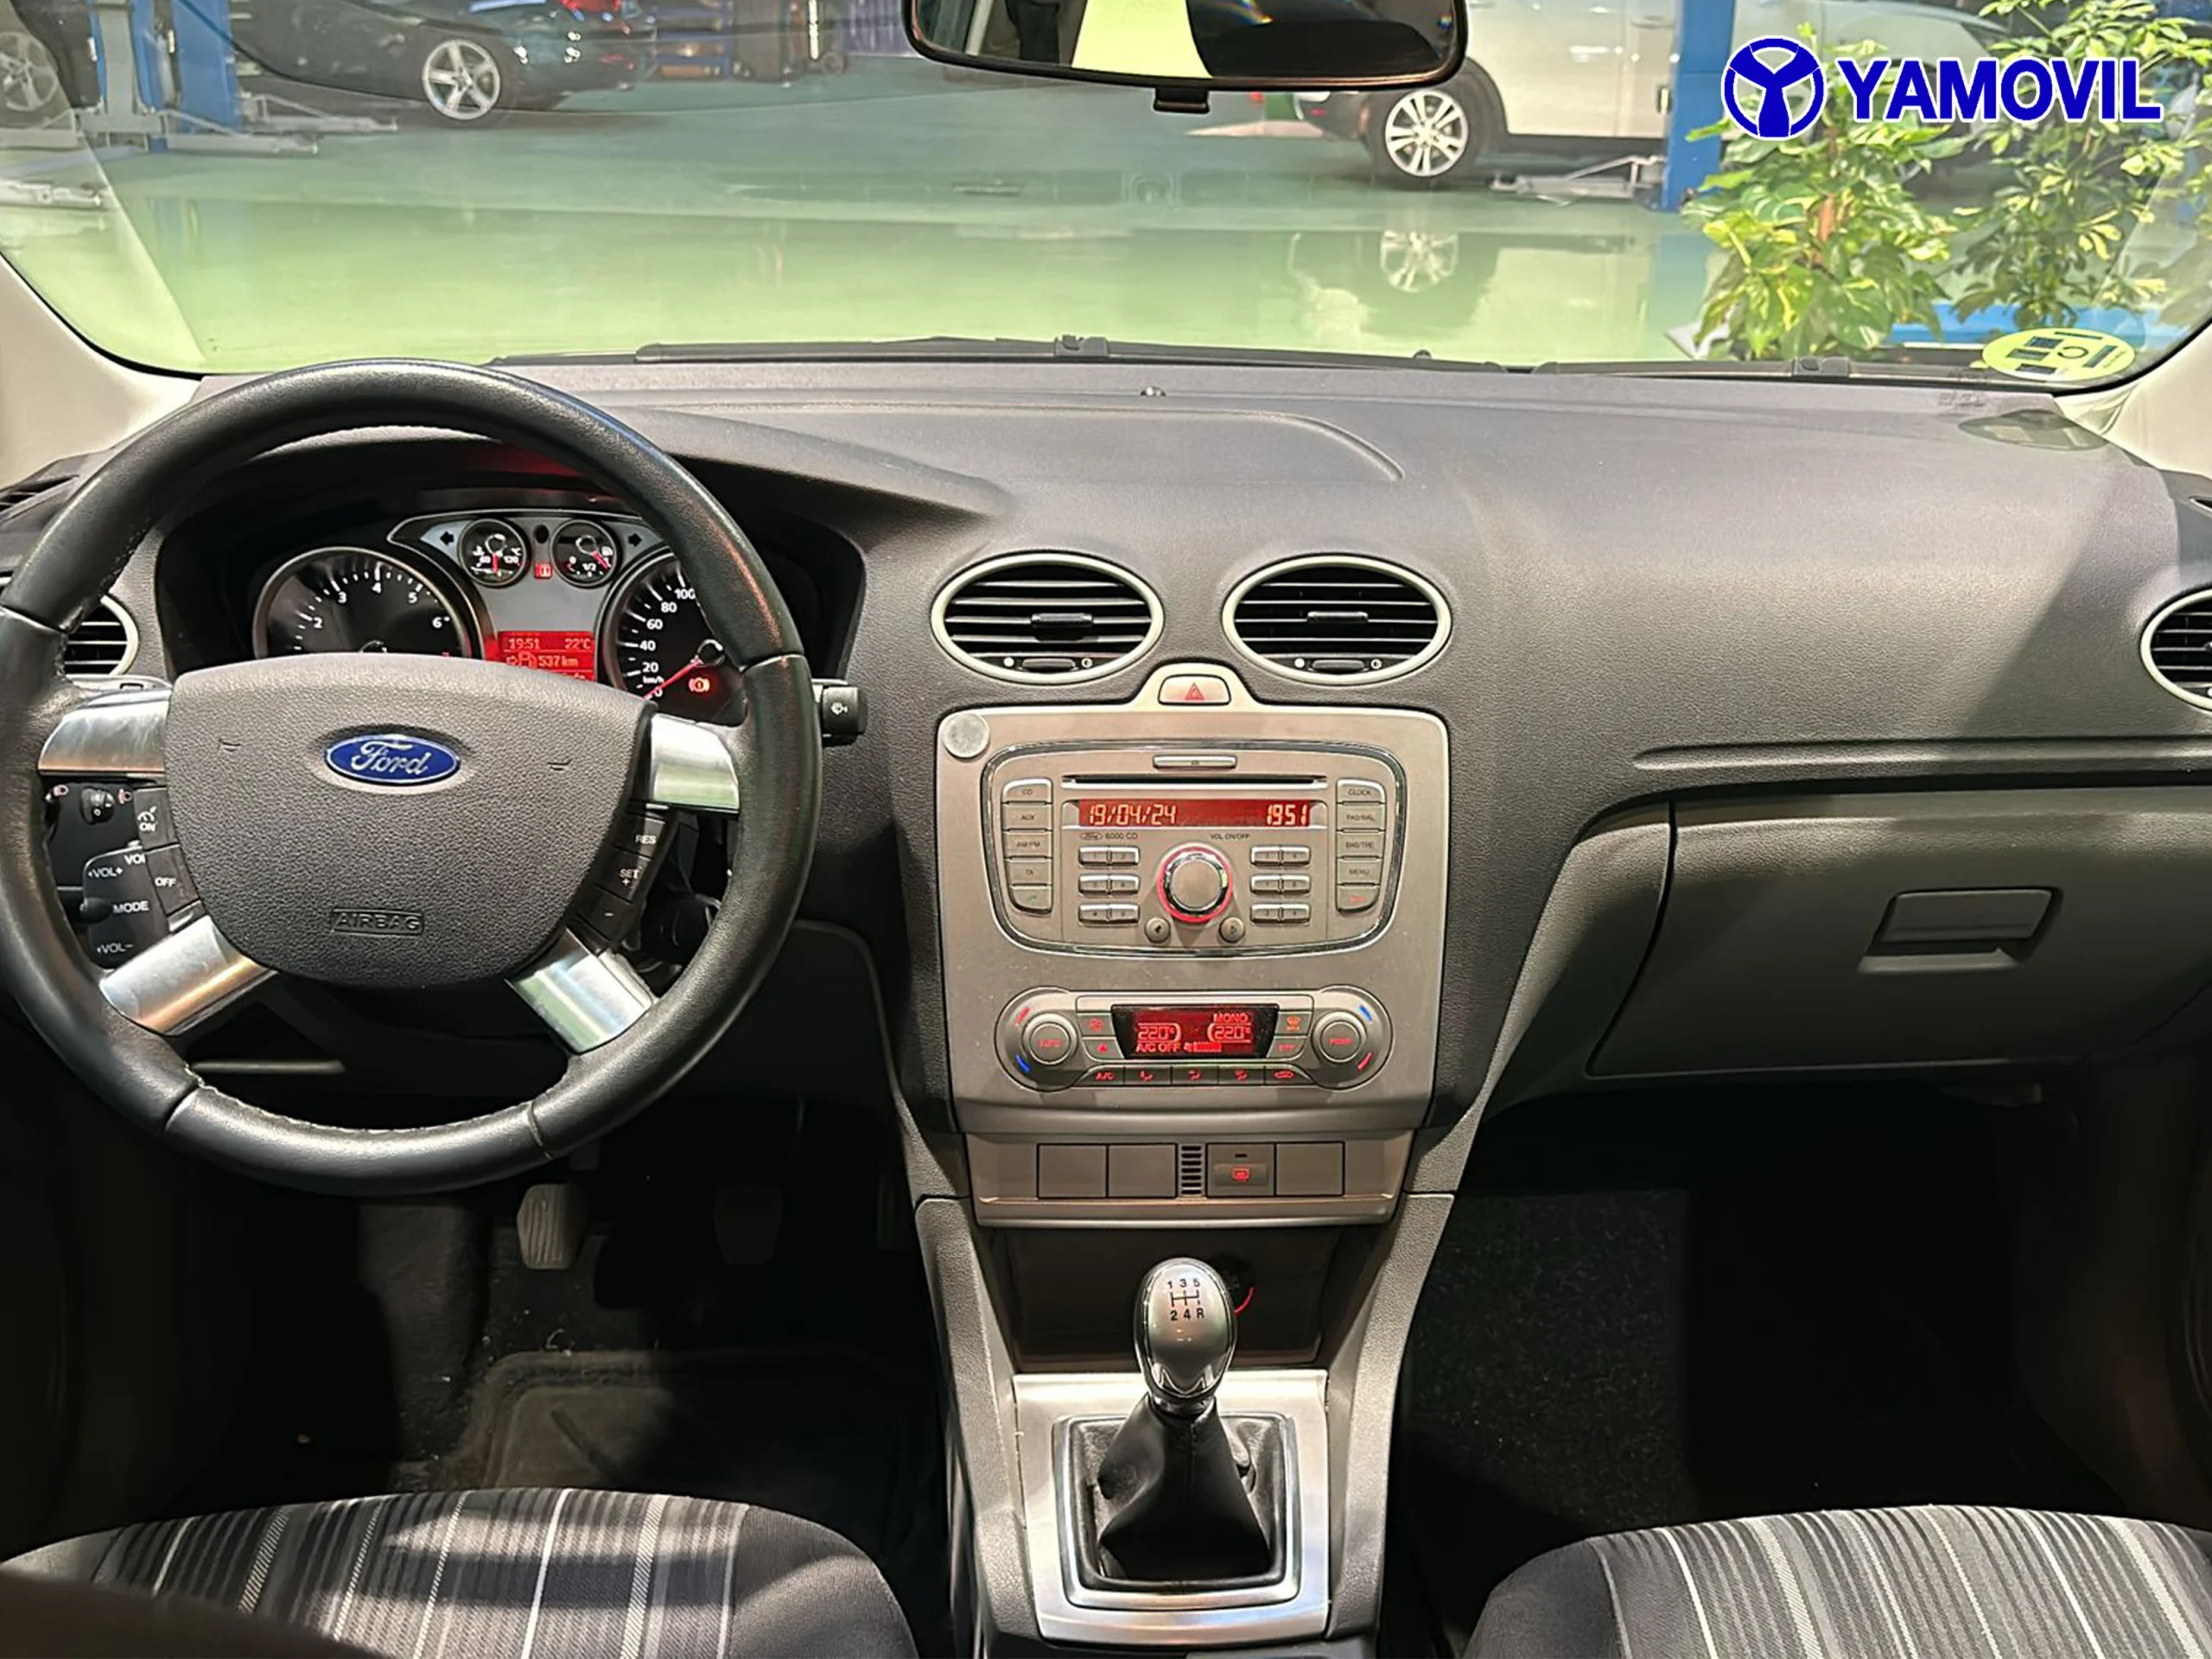 Ford Focus 1.6 Trend 74 kW (100 CV) - Foto 5